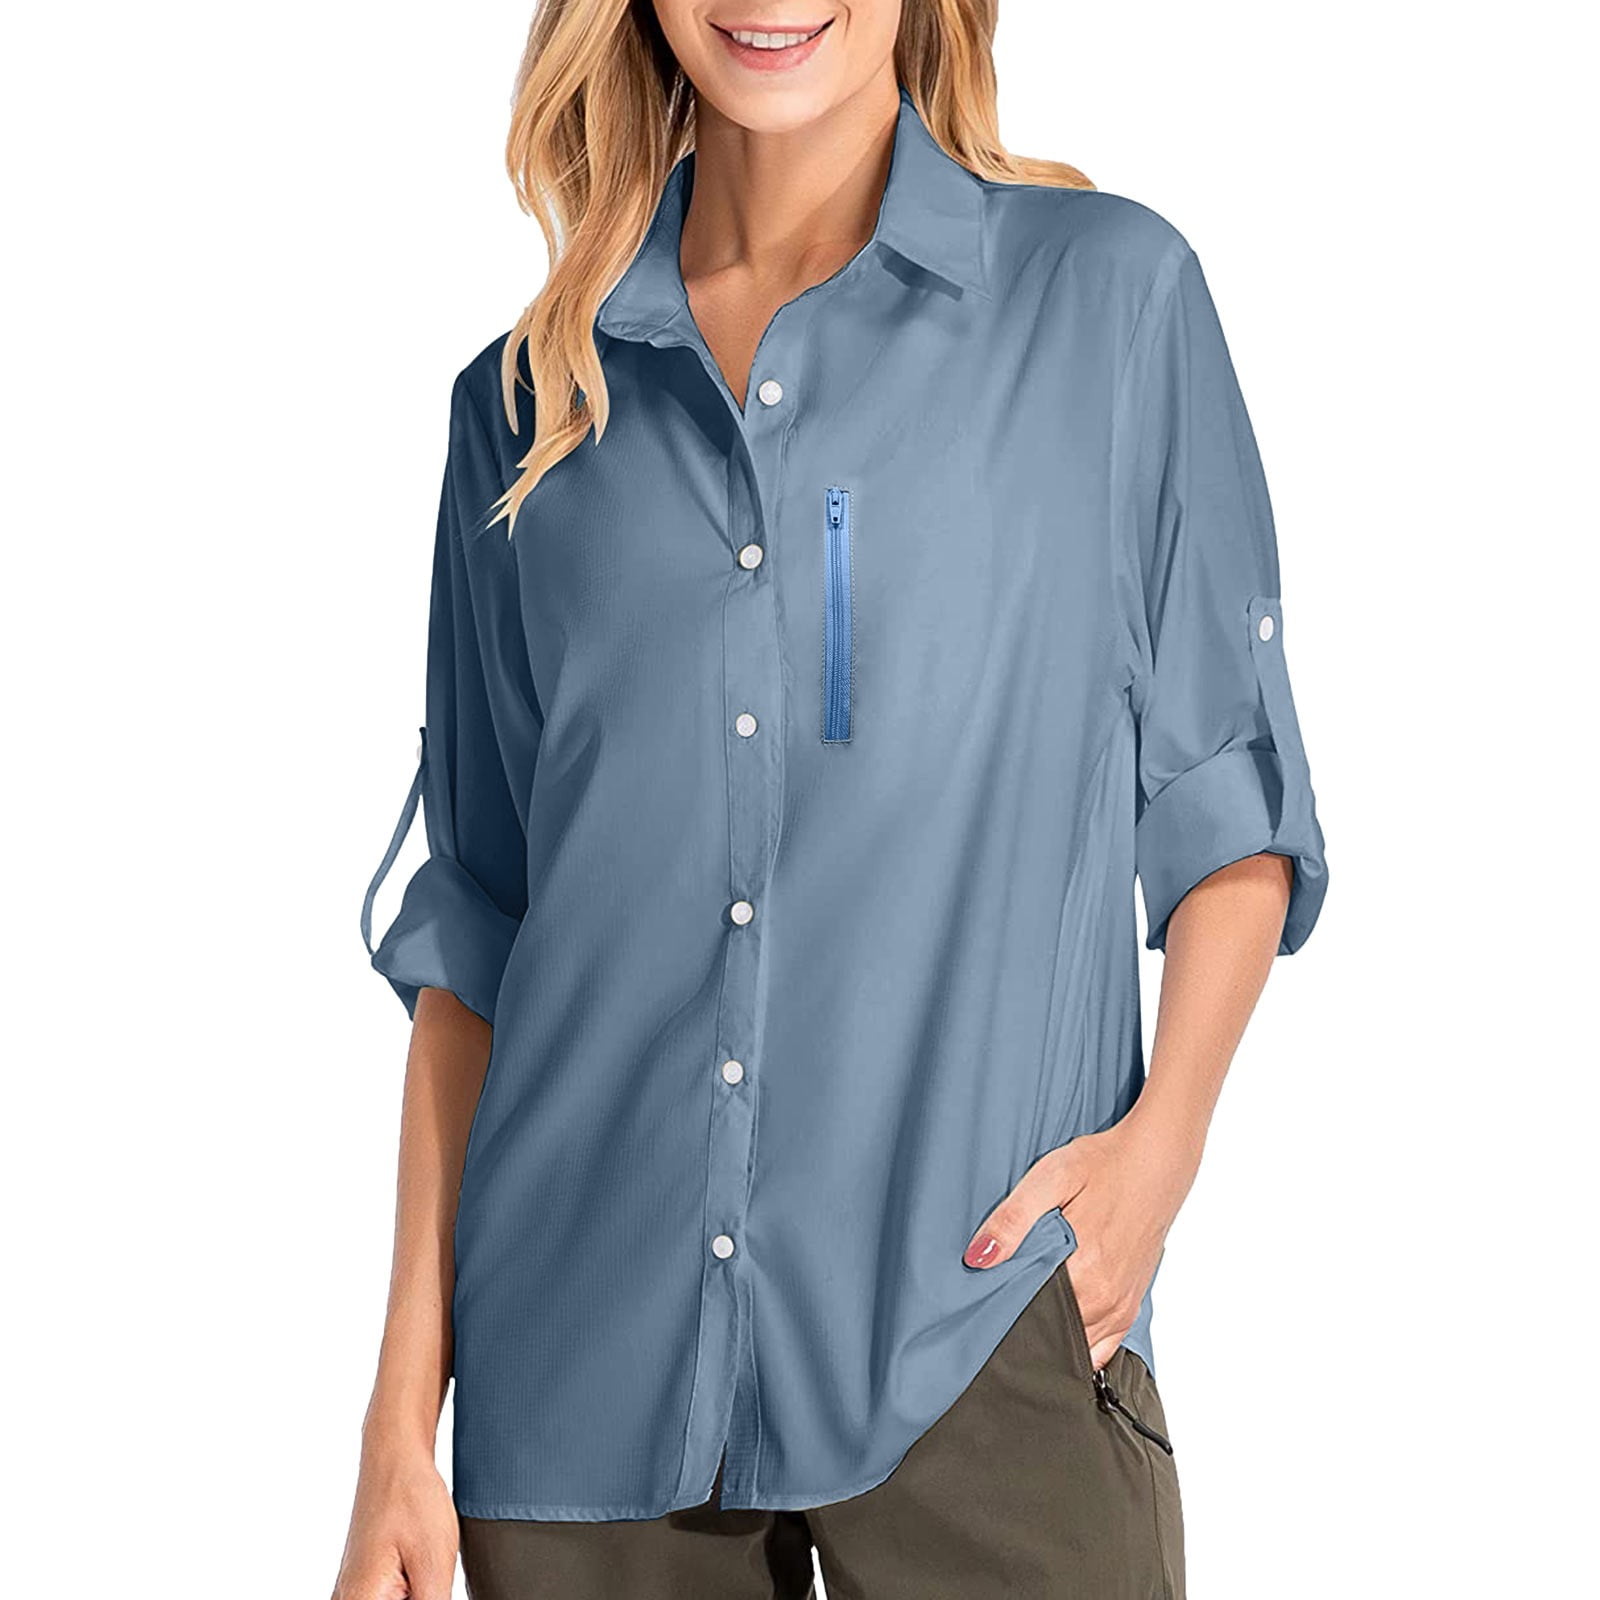 Vestitiy Women's Plus Size Summer Tops Womens Shirts UPF 50+ Sun Long Sleeve  Outdoor Cool Quick Dry Fishing Hiking Shirt 